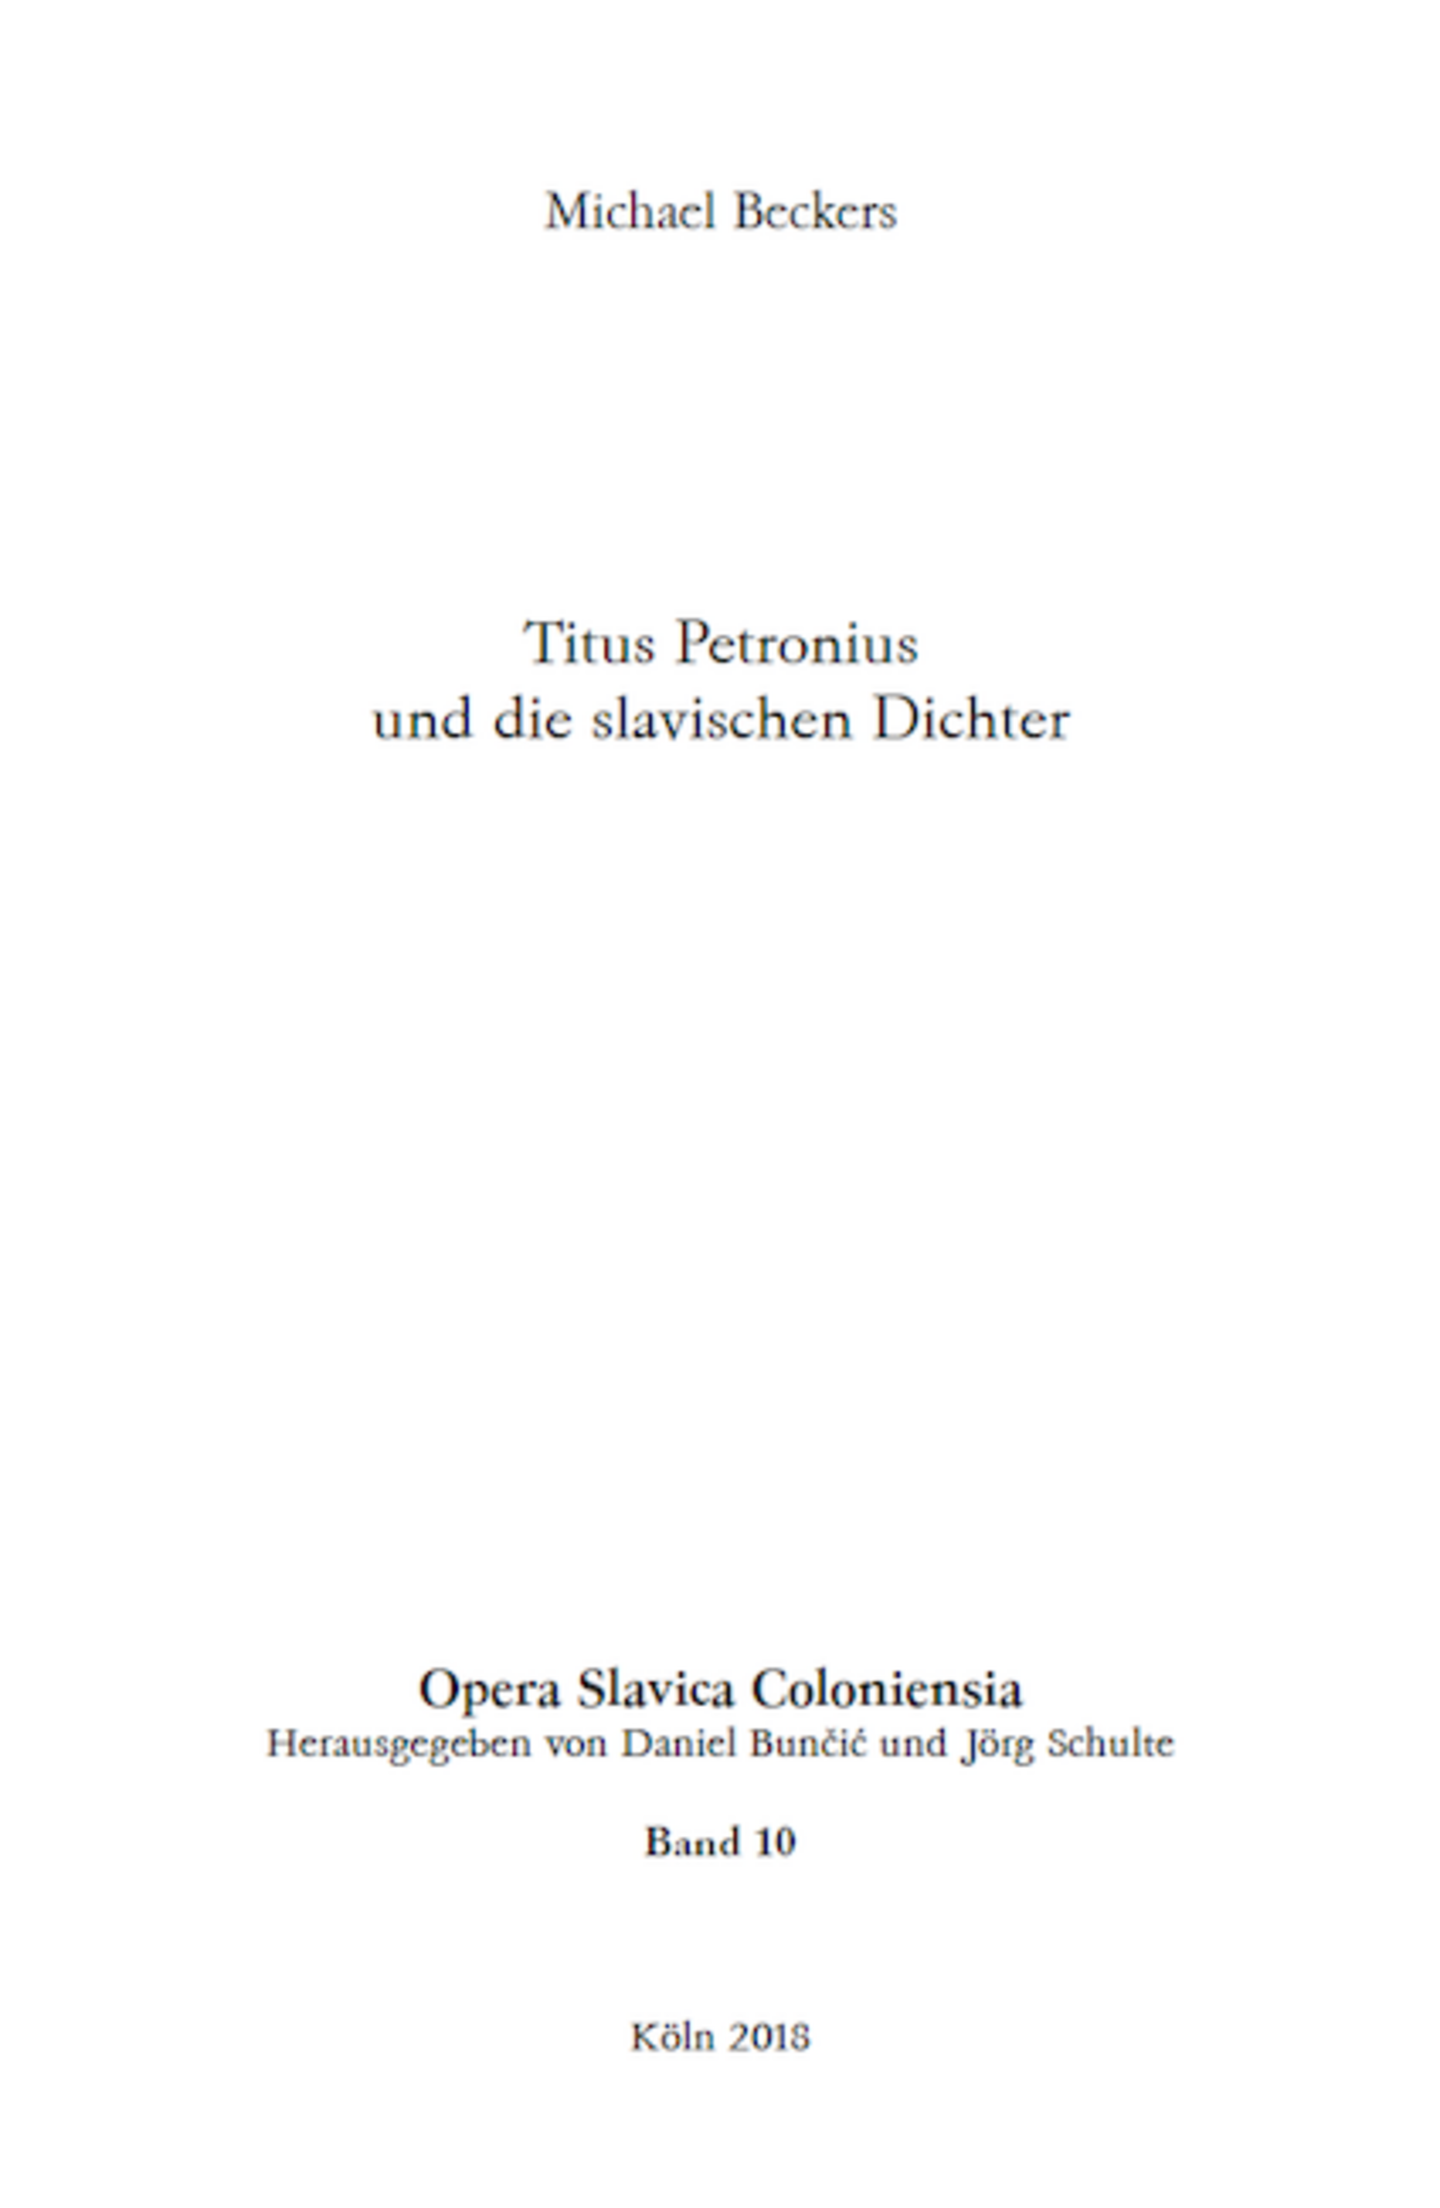 Opera Slavica Coloniensia, Bd. 10: Michael Beckers (2018) Titus Petronius und die slavischen Dichter